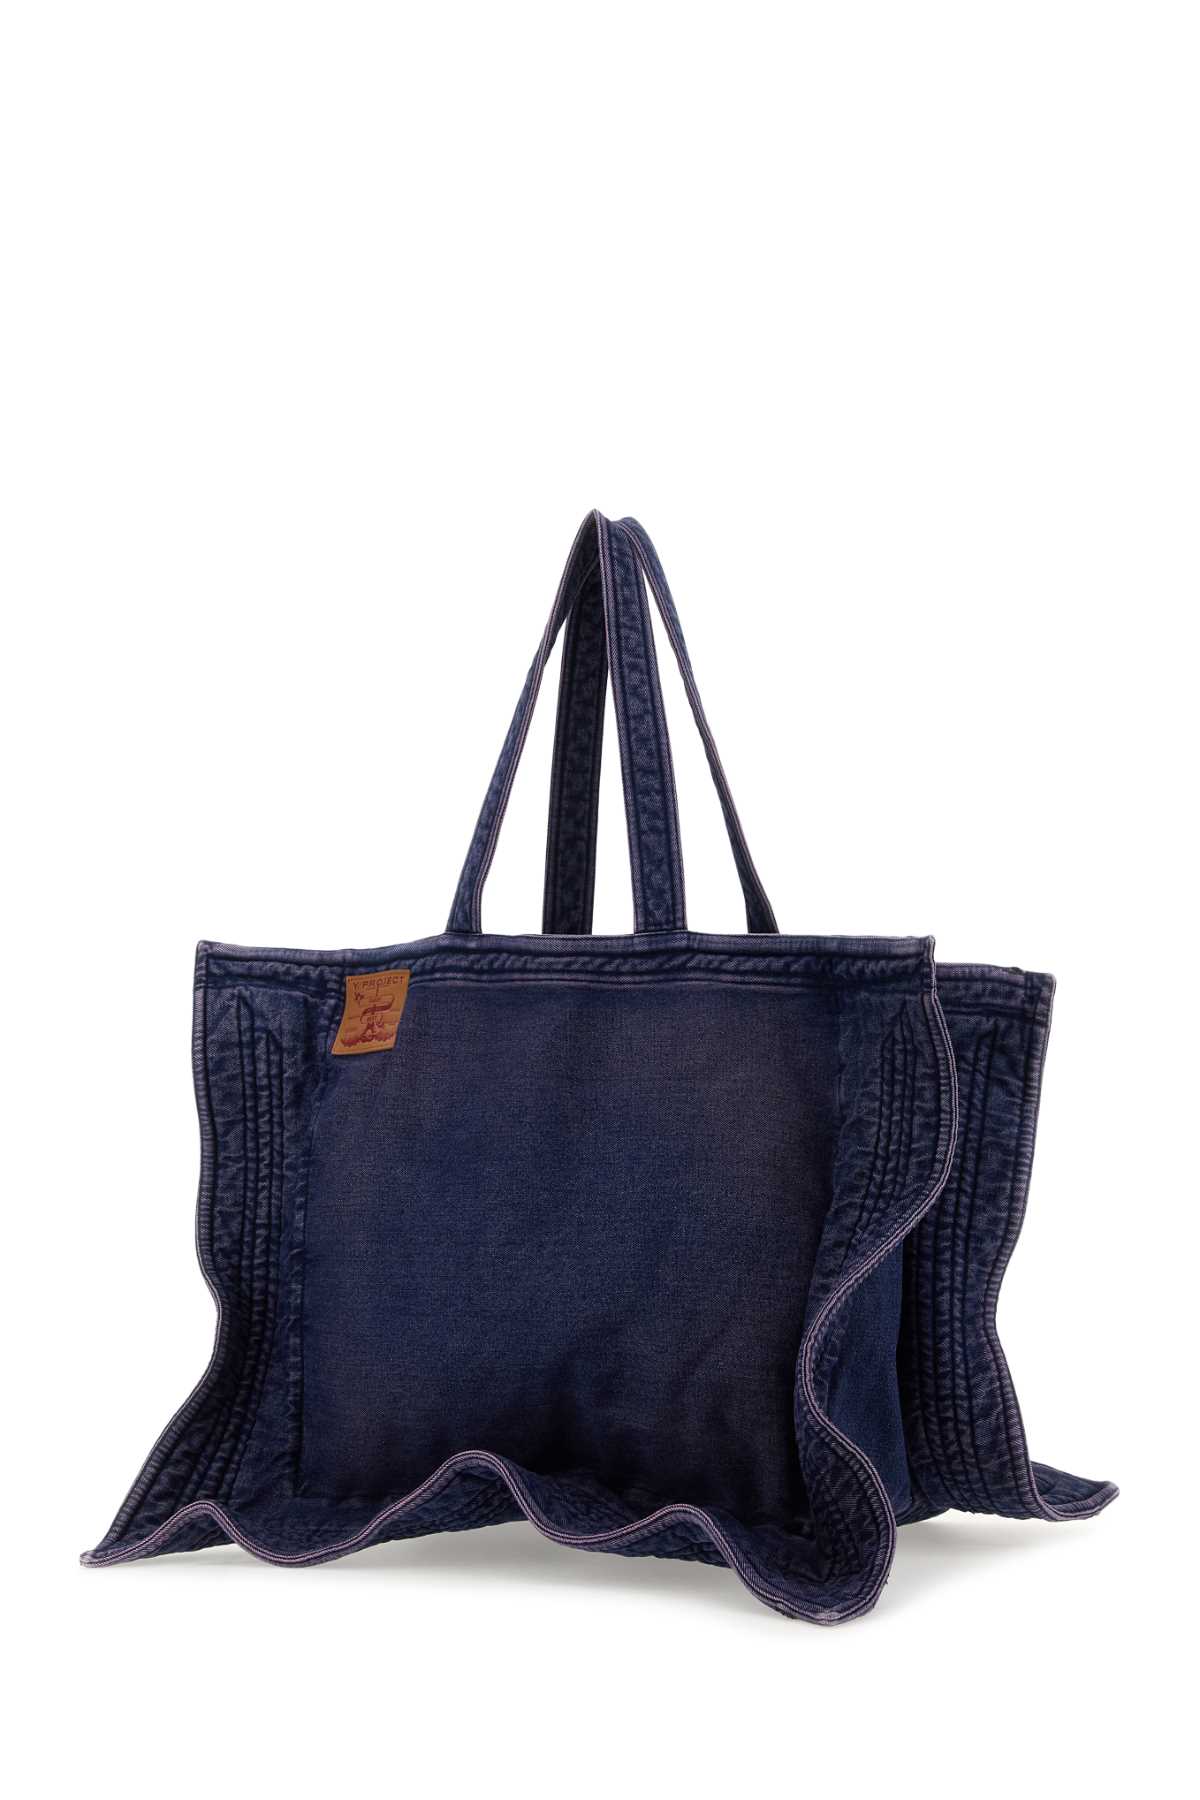 Y/project Purple Denim Shopping Bag In Purple Navy